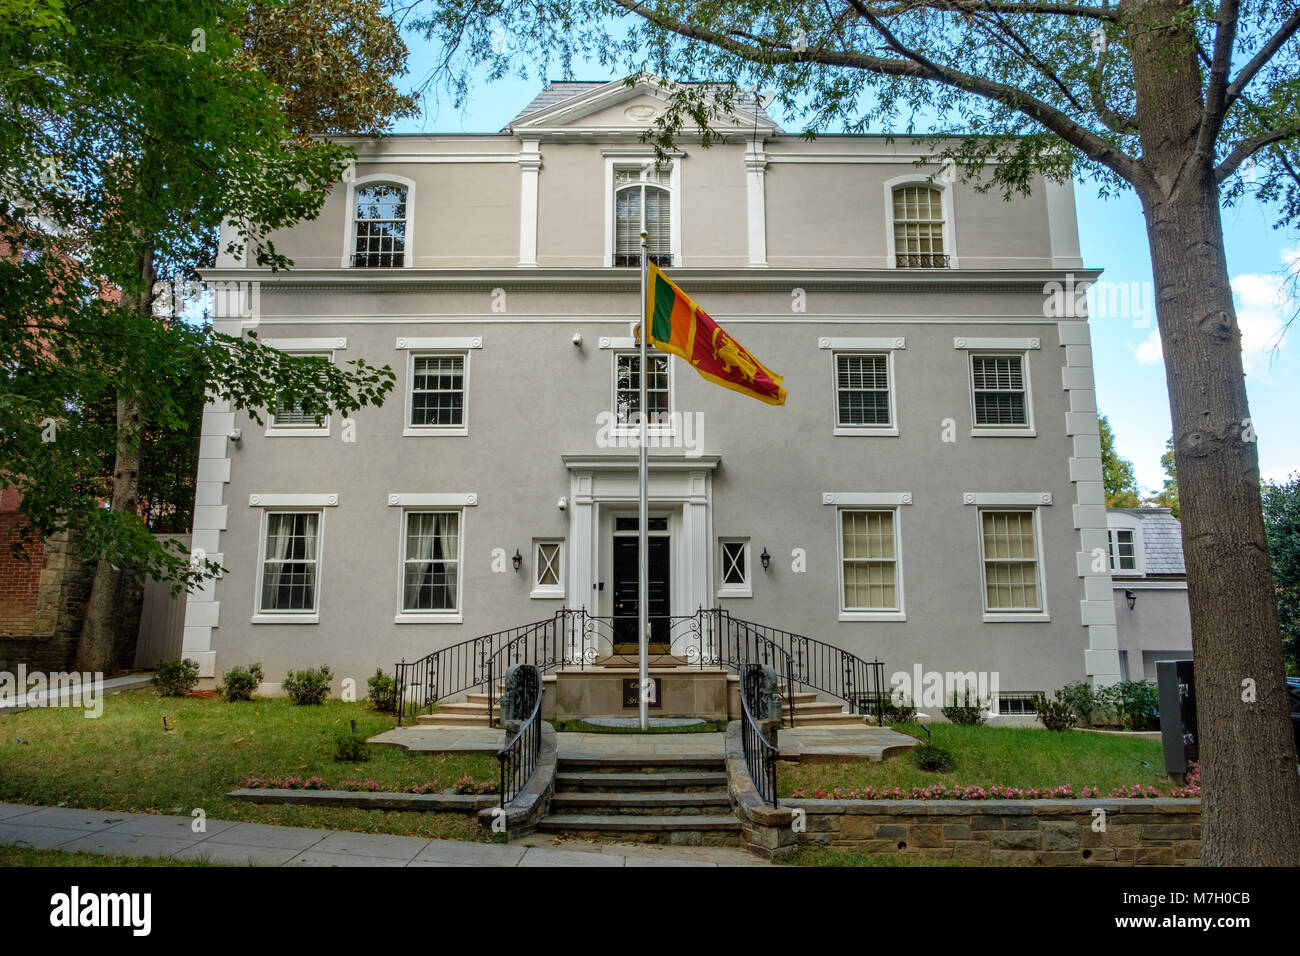 Embassy of Sri Lanka